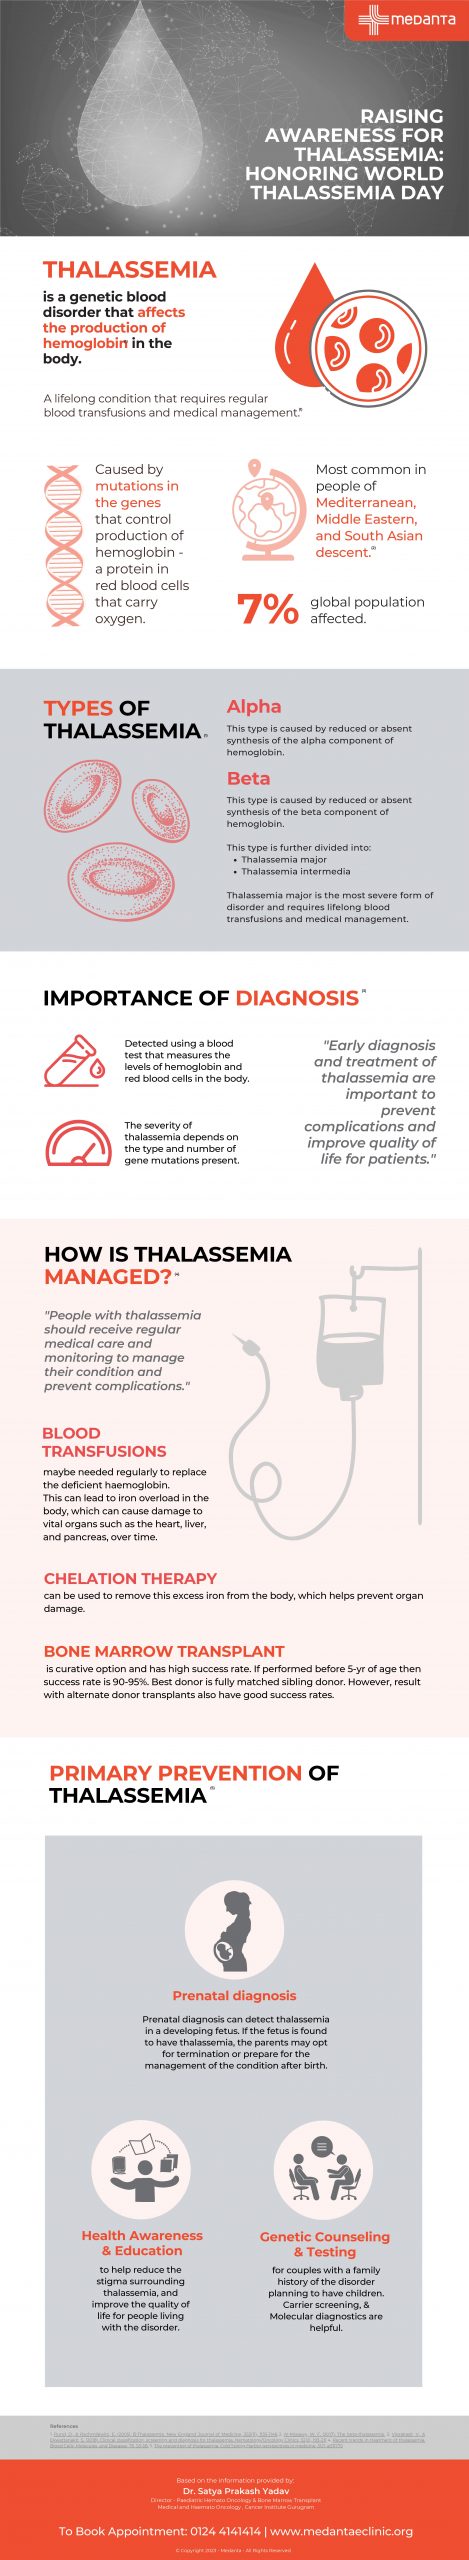 raising-awareness-for-thalassemia-honoring-world-thalassemia-day